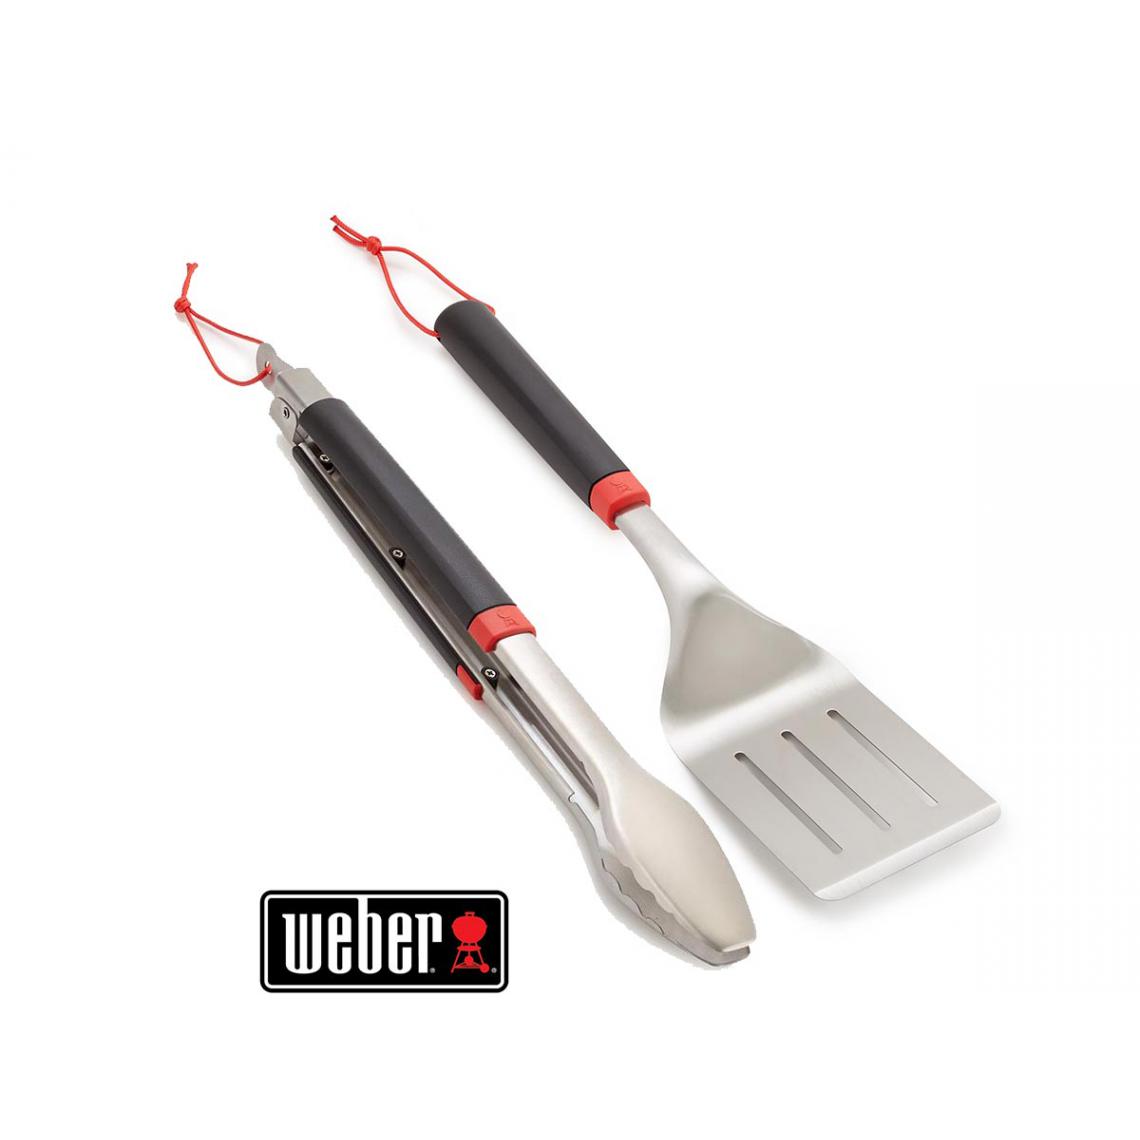 Weber - Kit pince et spatule Good pour barbecue Weber - Accessoires barbecue